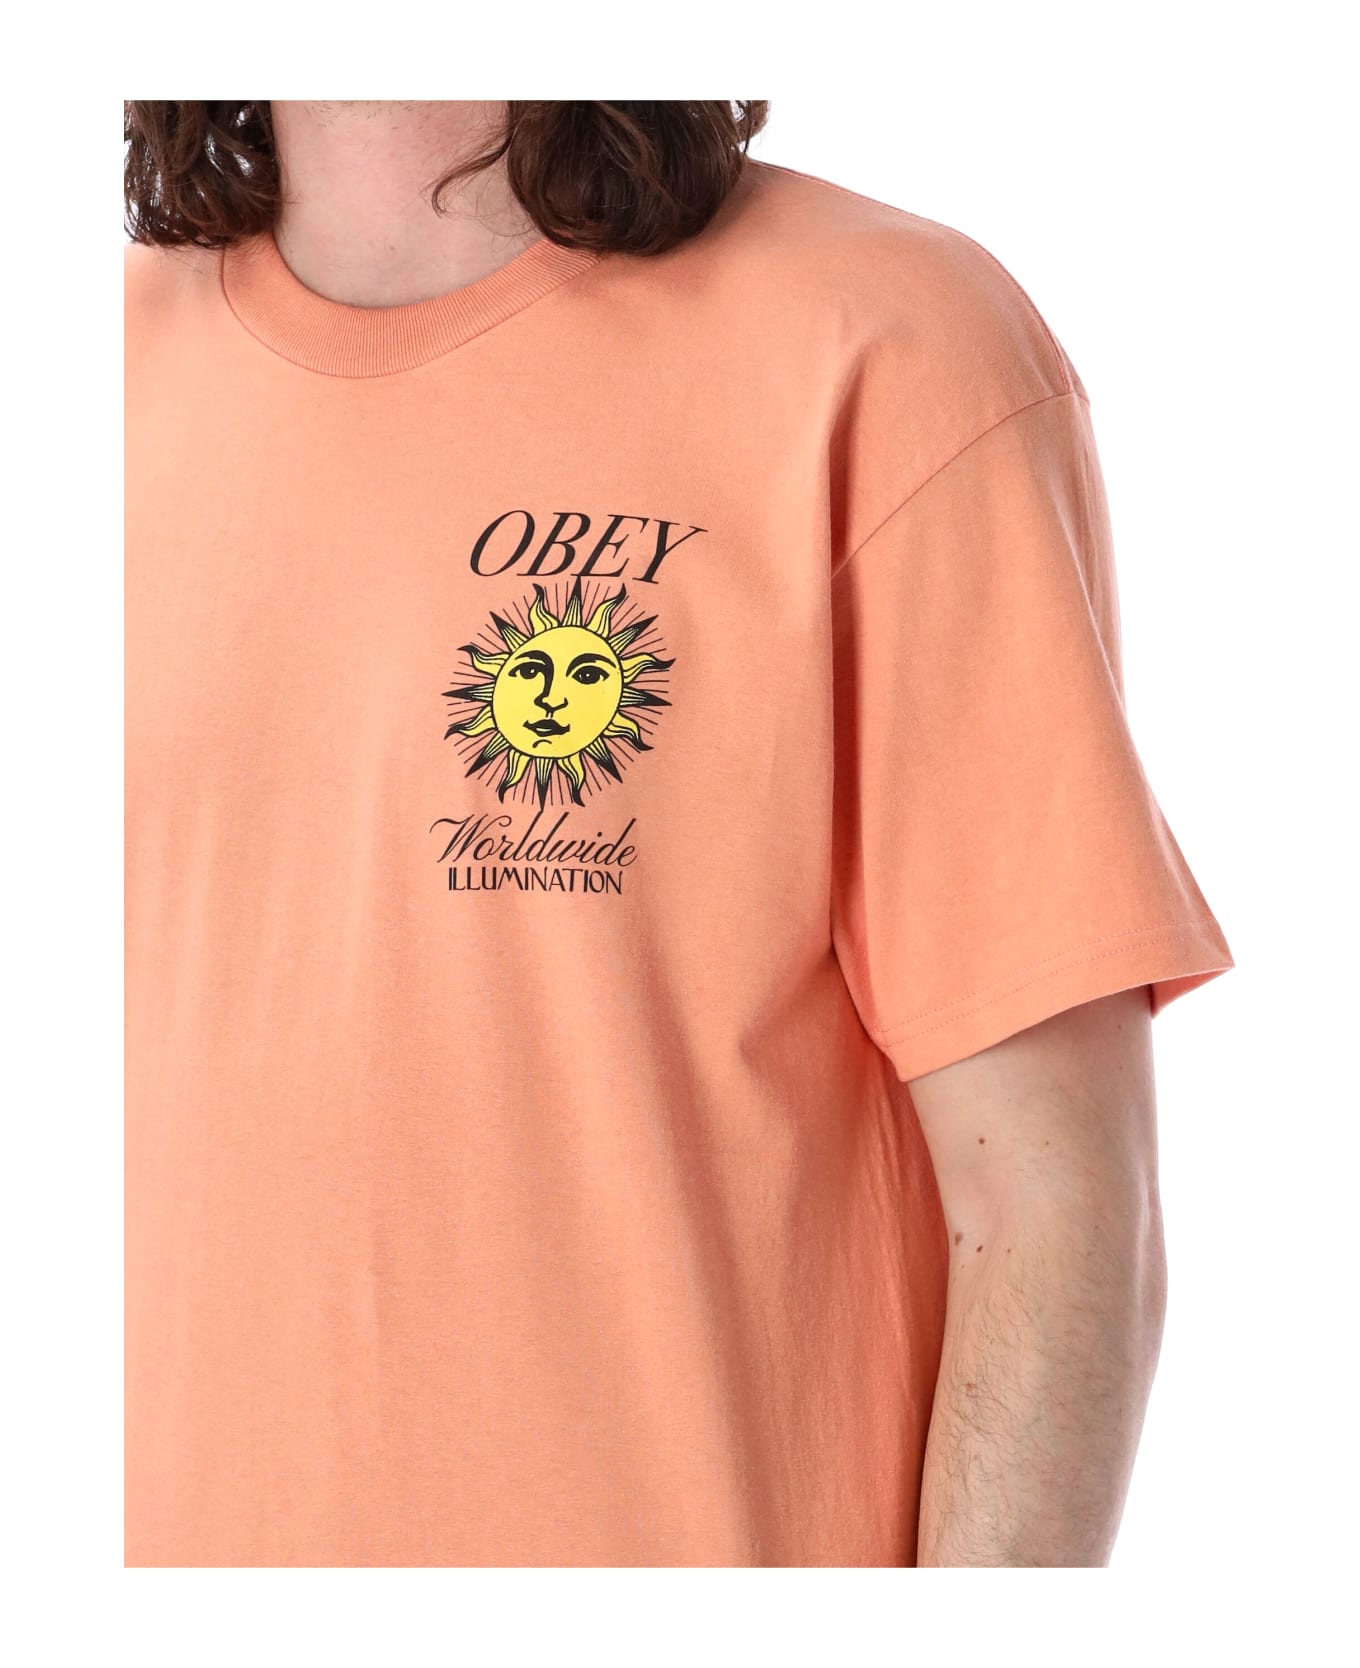 Obey Illumination Classic T-shirt - CITRUS